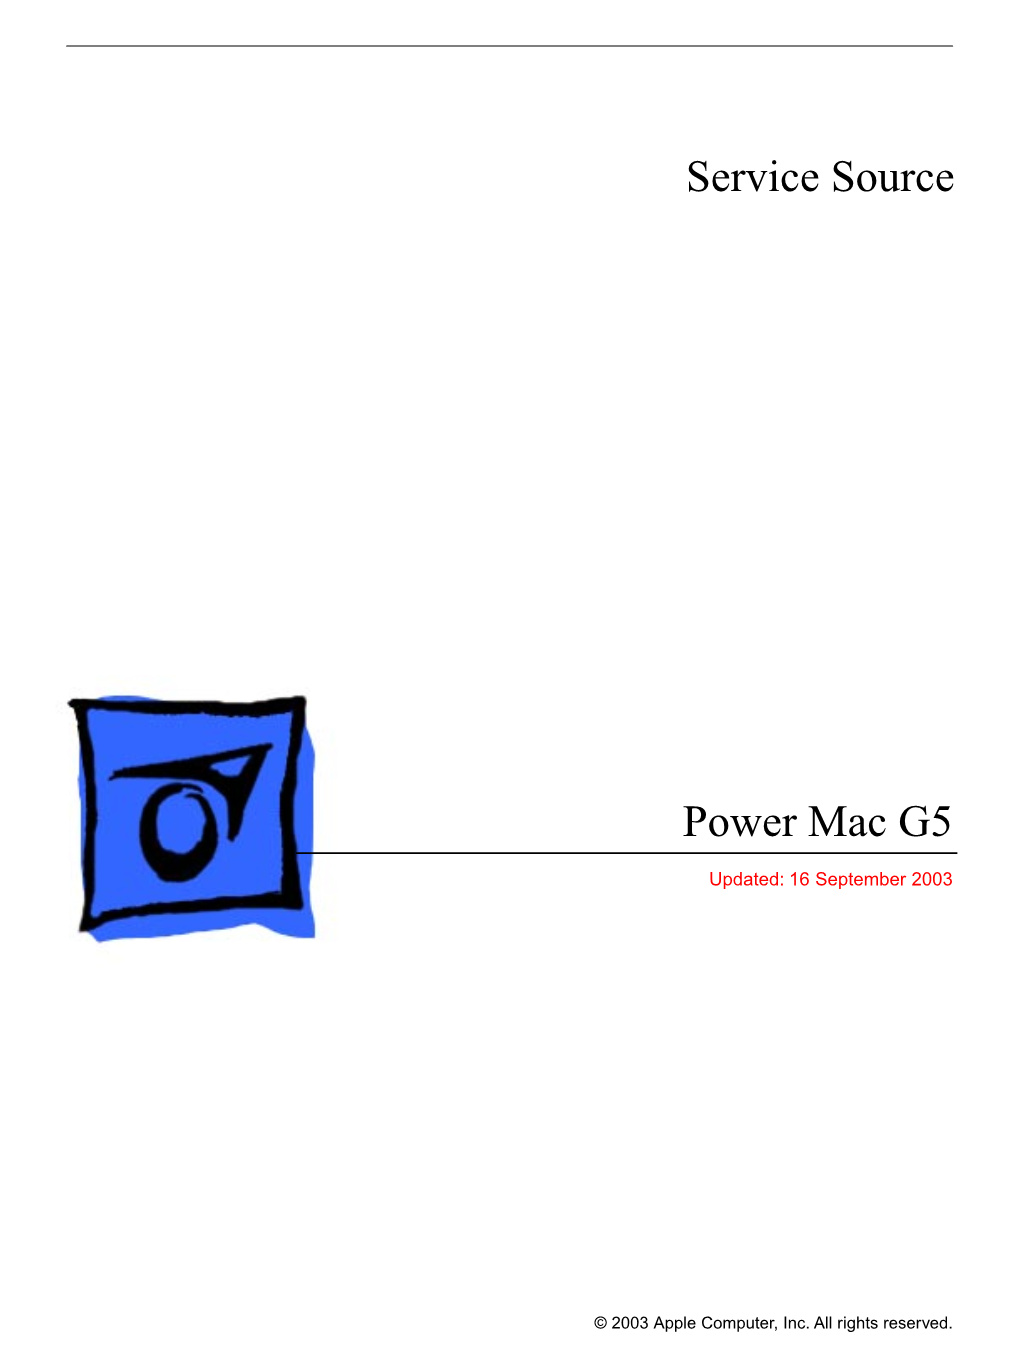 Service Source Power Mac G5